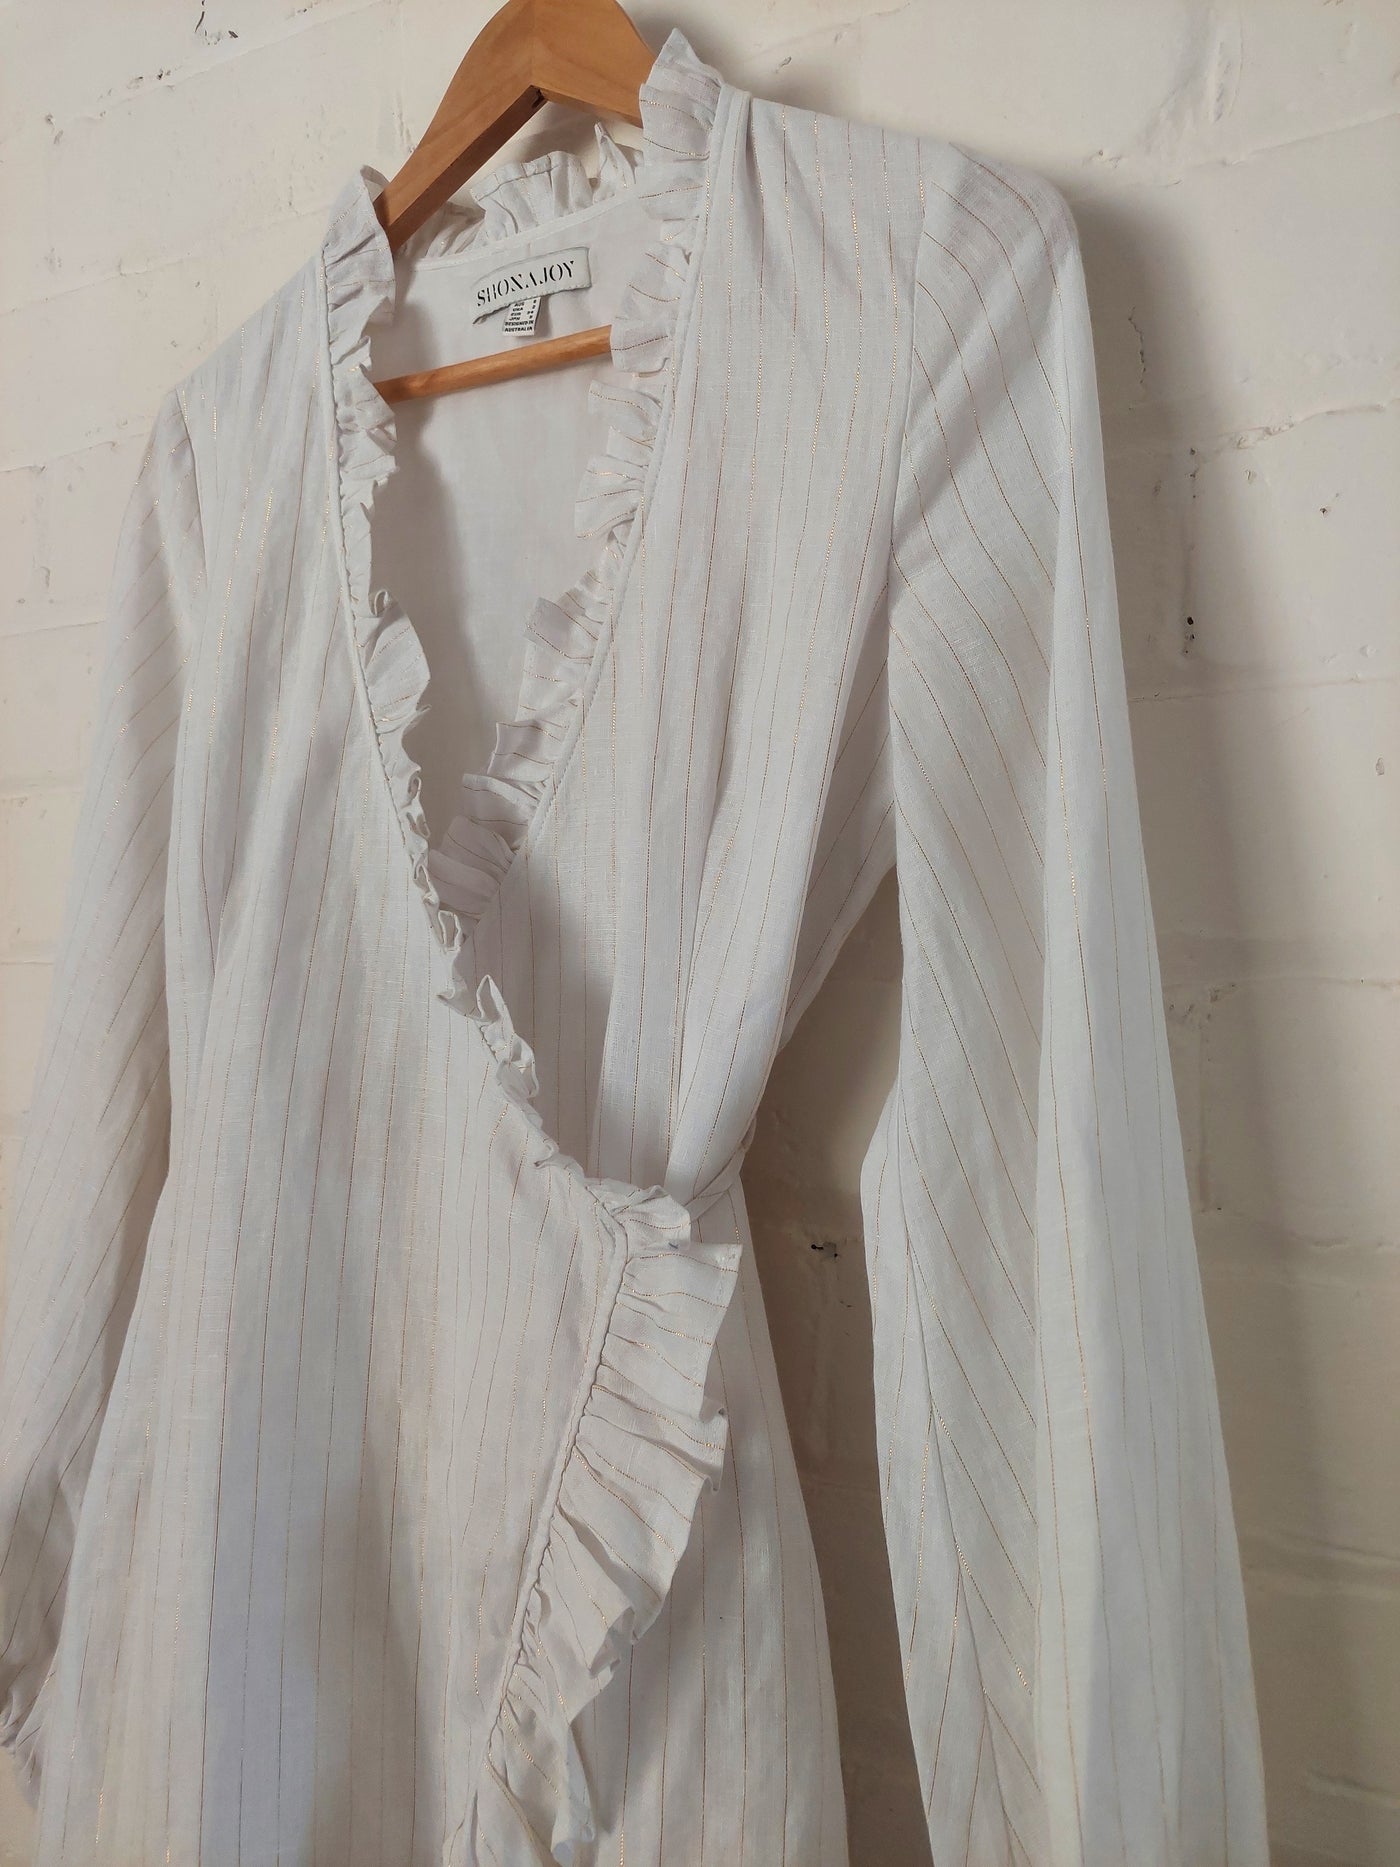 Shona Joy Holden Wrap Mini Dress - White / Gold, Size 6